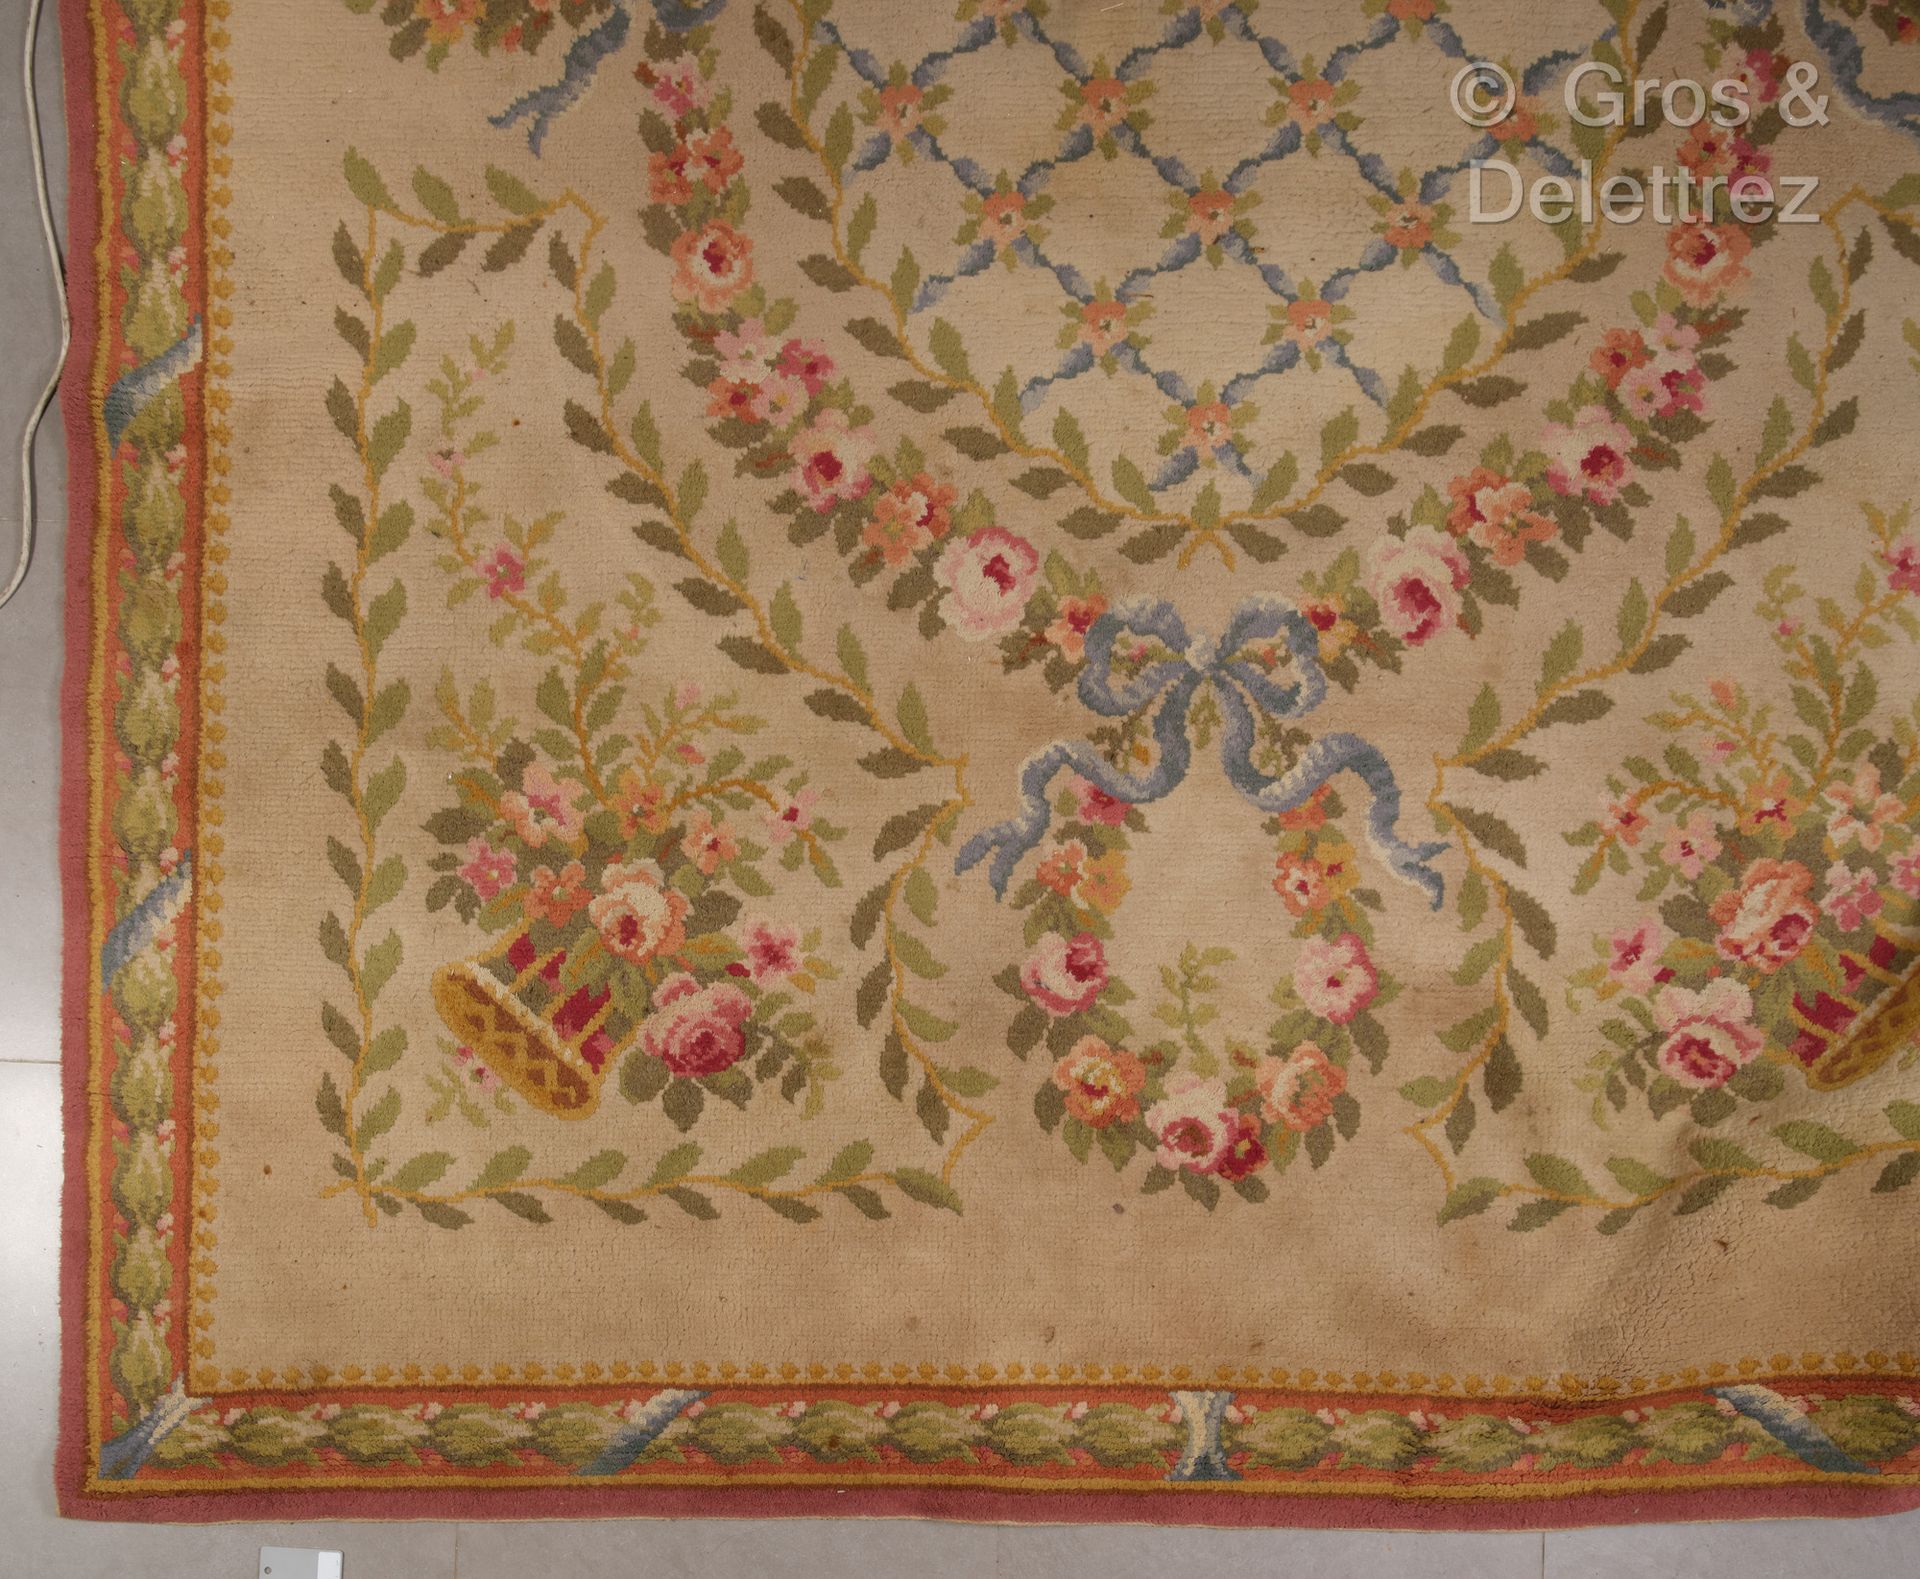 Null LA SAVONNERIE.大型羊毛地毯，有多色花的设计。
约350 x 250厘米。